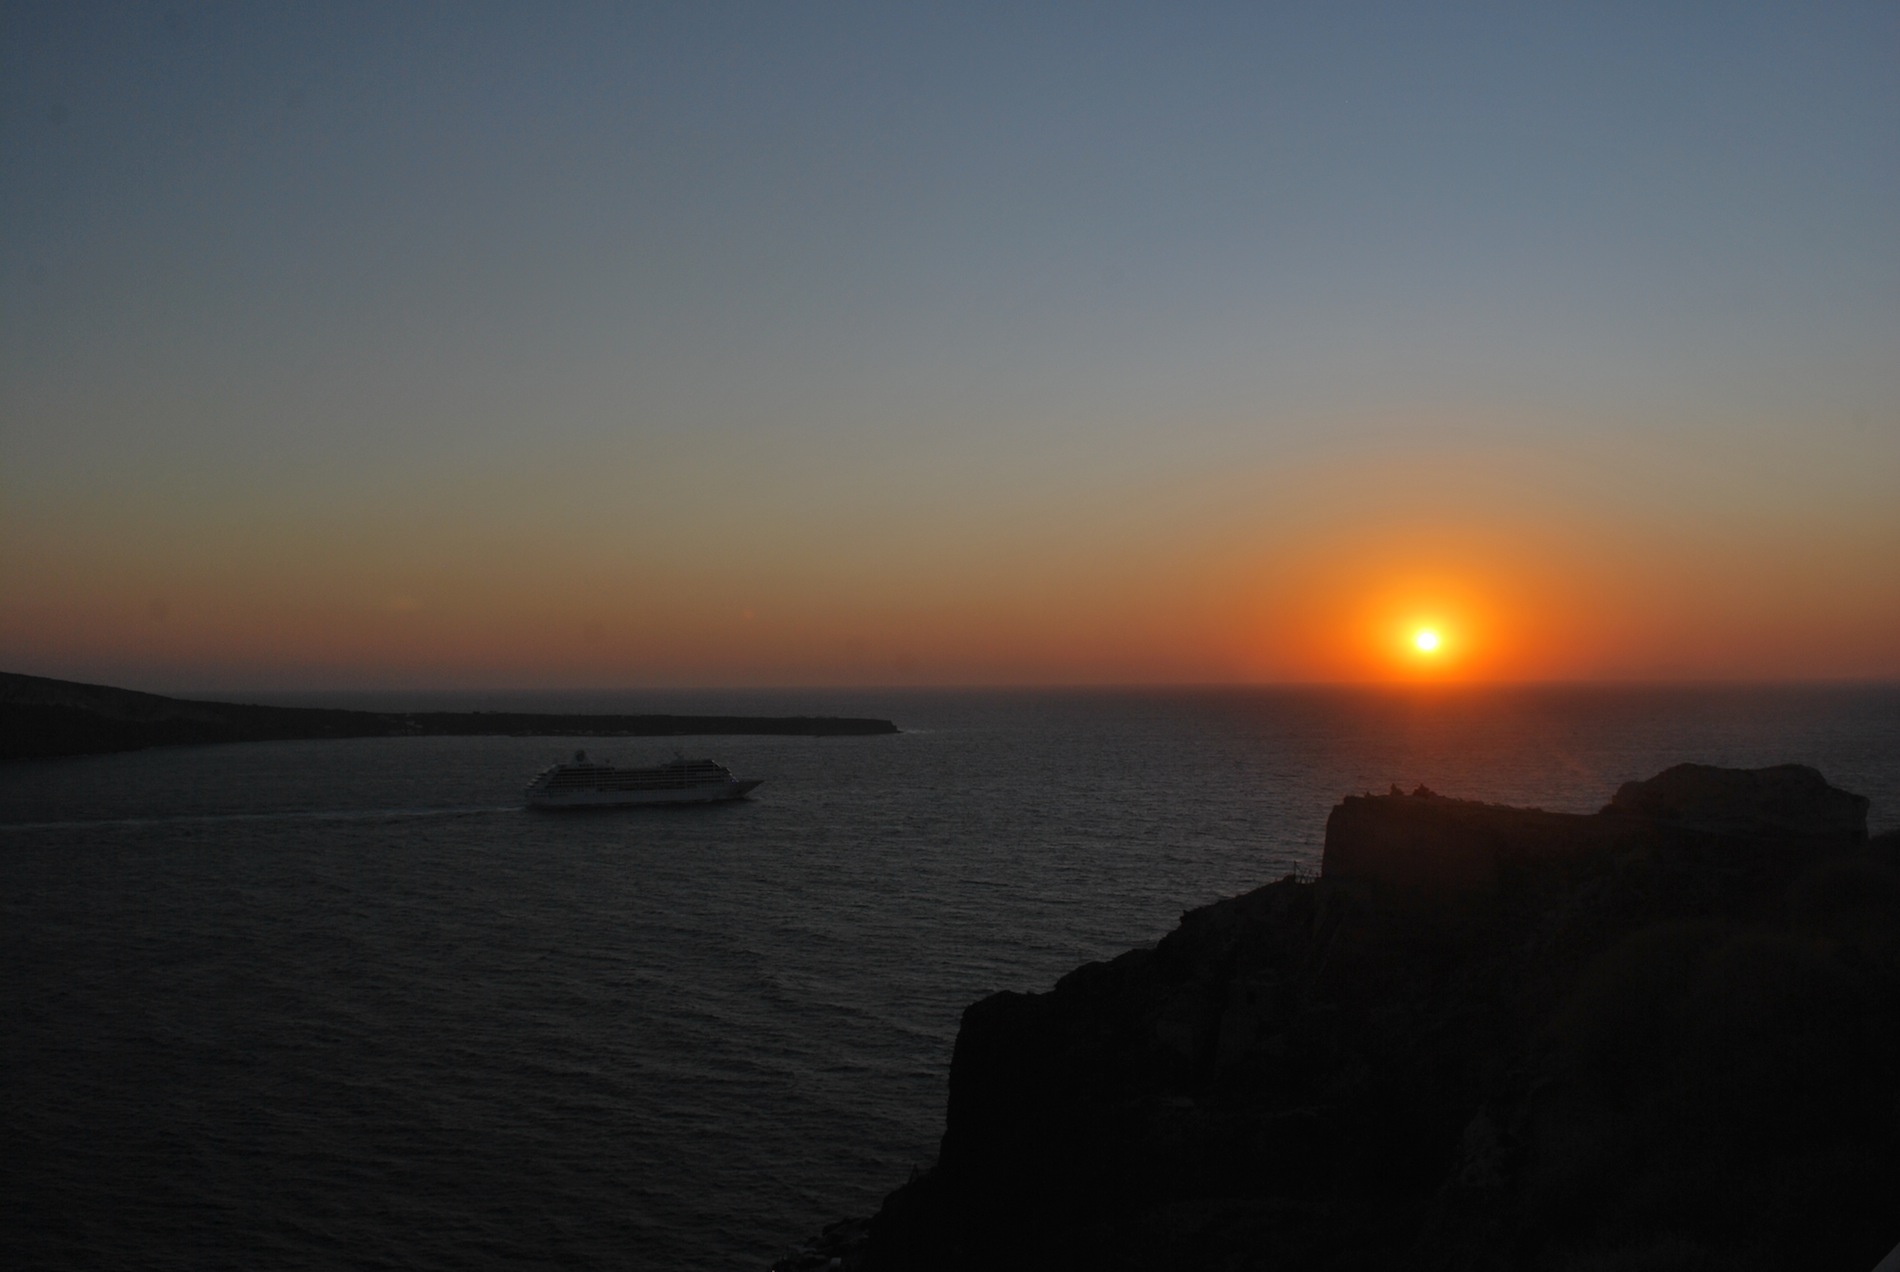 Ship approaches the setting sun in Santorini | Hemant Soreng's ...